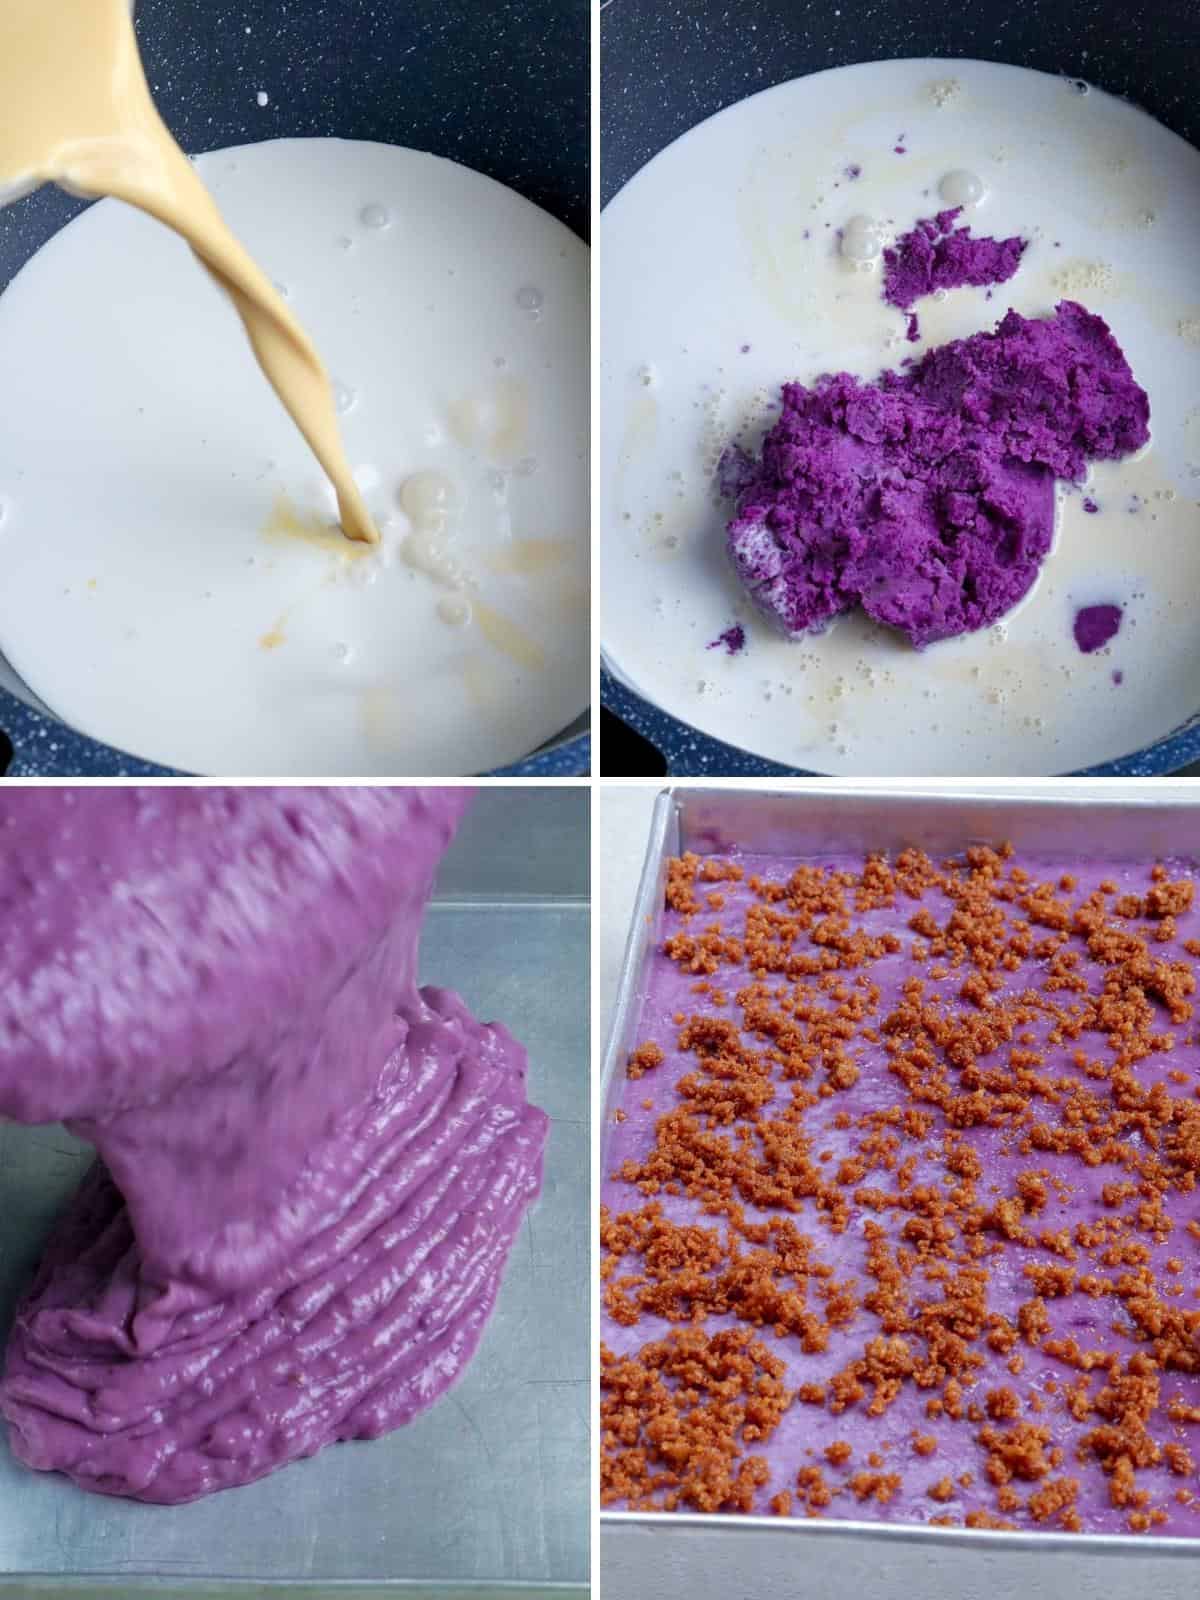 making Filipino coconut pudding with purple yam